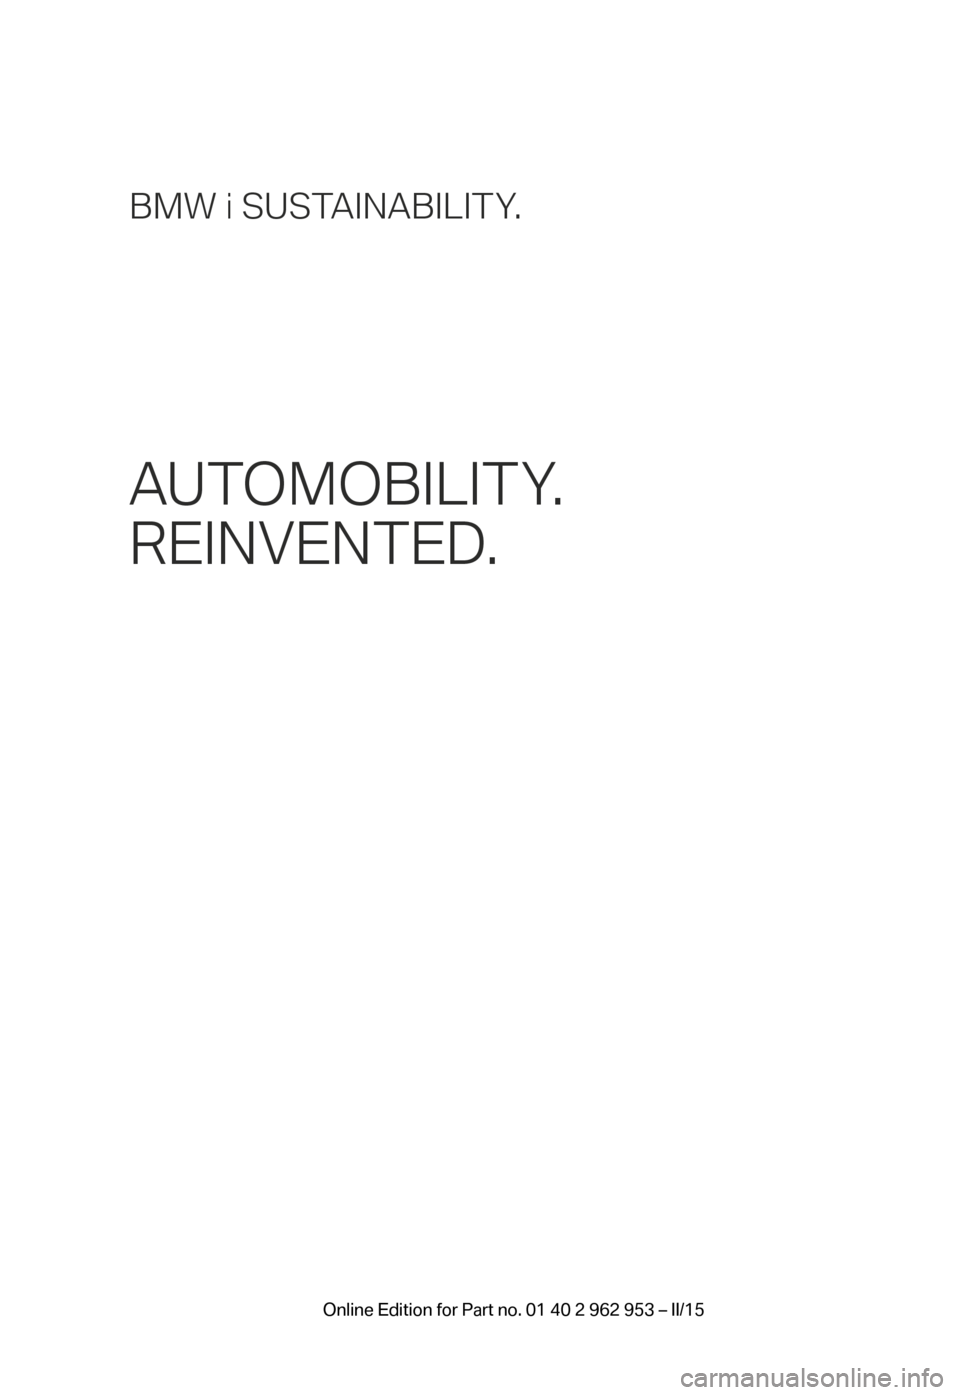 BMW I3 2014 I01 Owners Manual BMW i SUSTAINABILITY.
AUTOMOBILITY.
REINVENTED.
BMW_i3_Bedienungseinleger_210x138mm_us_lektoriert_RZ.indd   122.01.14   15:19 